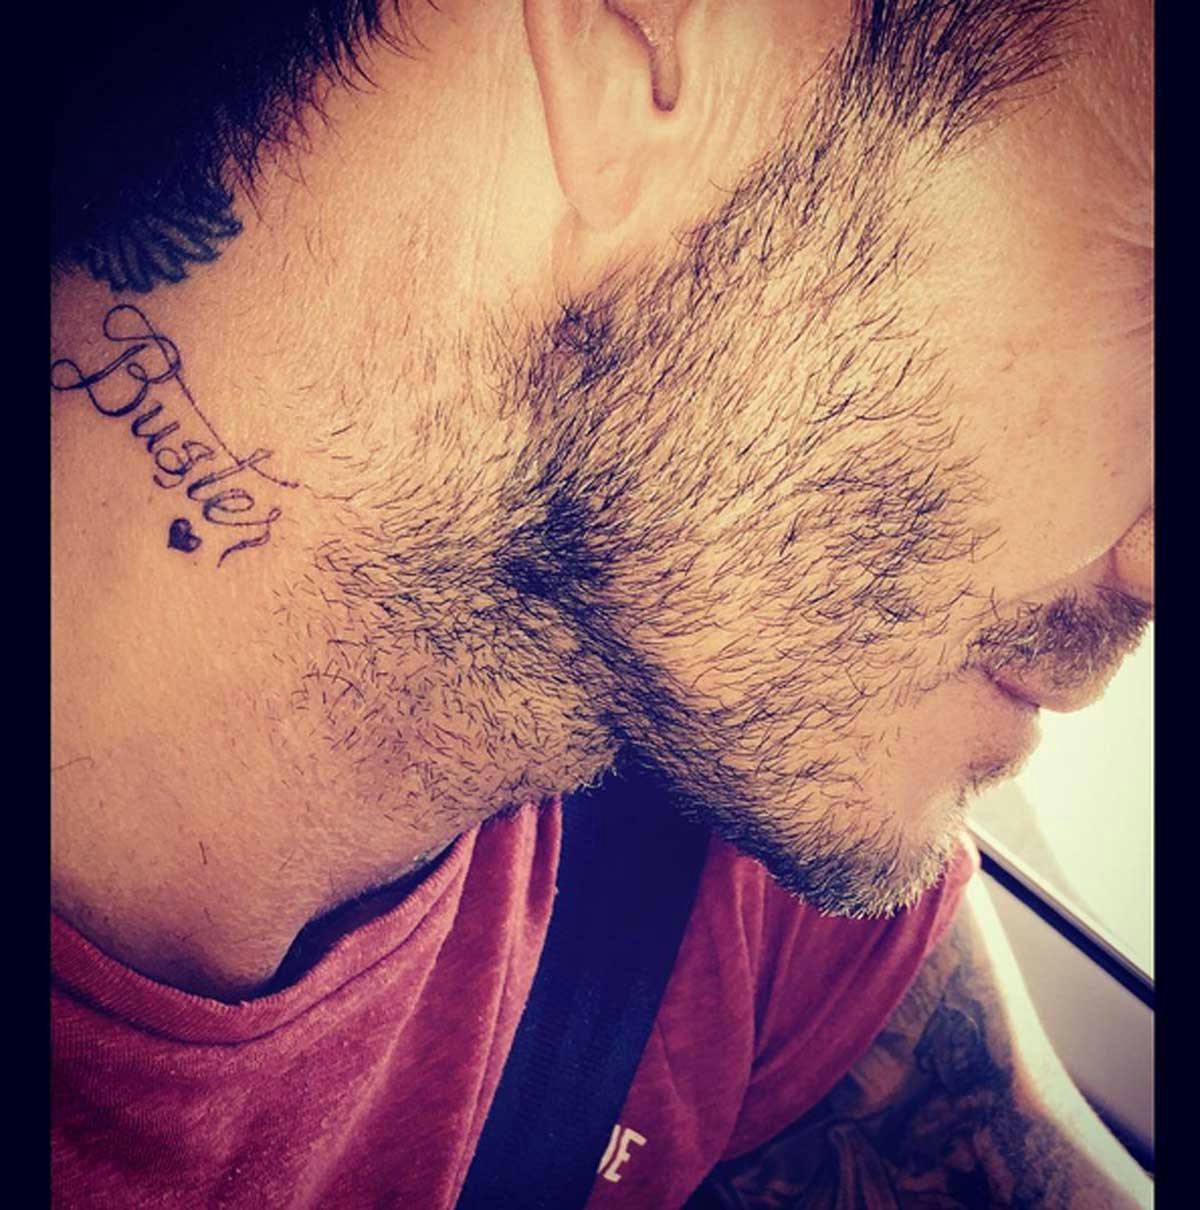 David Beckham Gets Latest Tattoo Designed by Daughter Harper | Football News